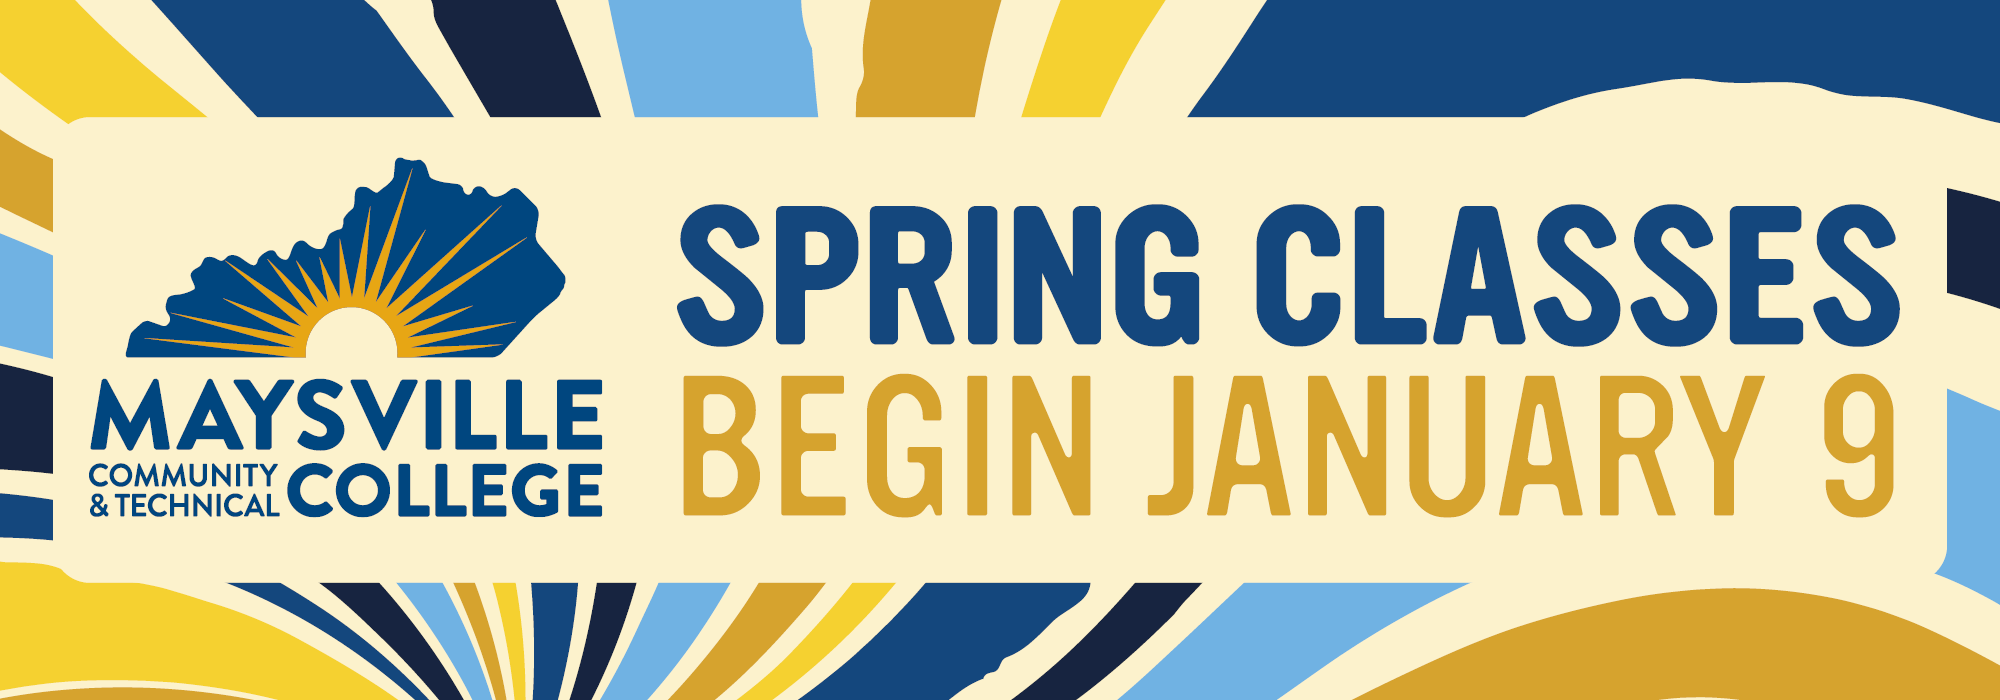 Spring Classes Begin January 9